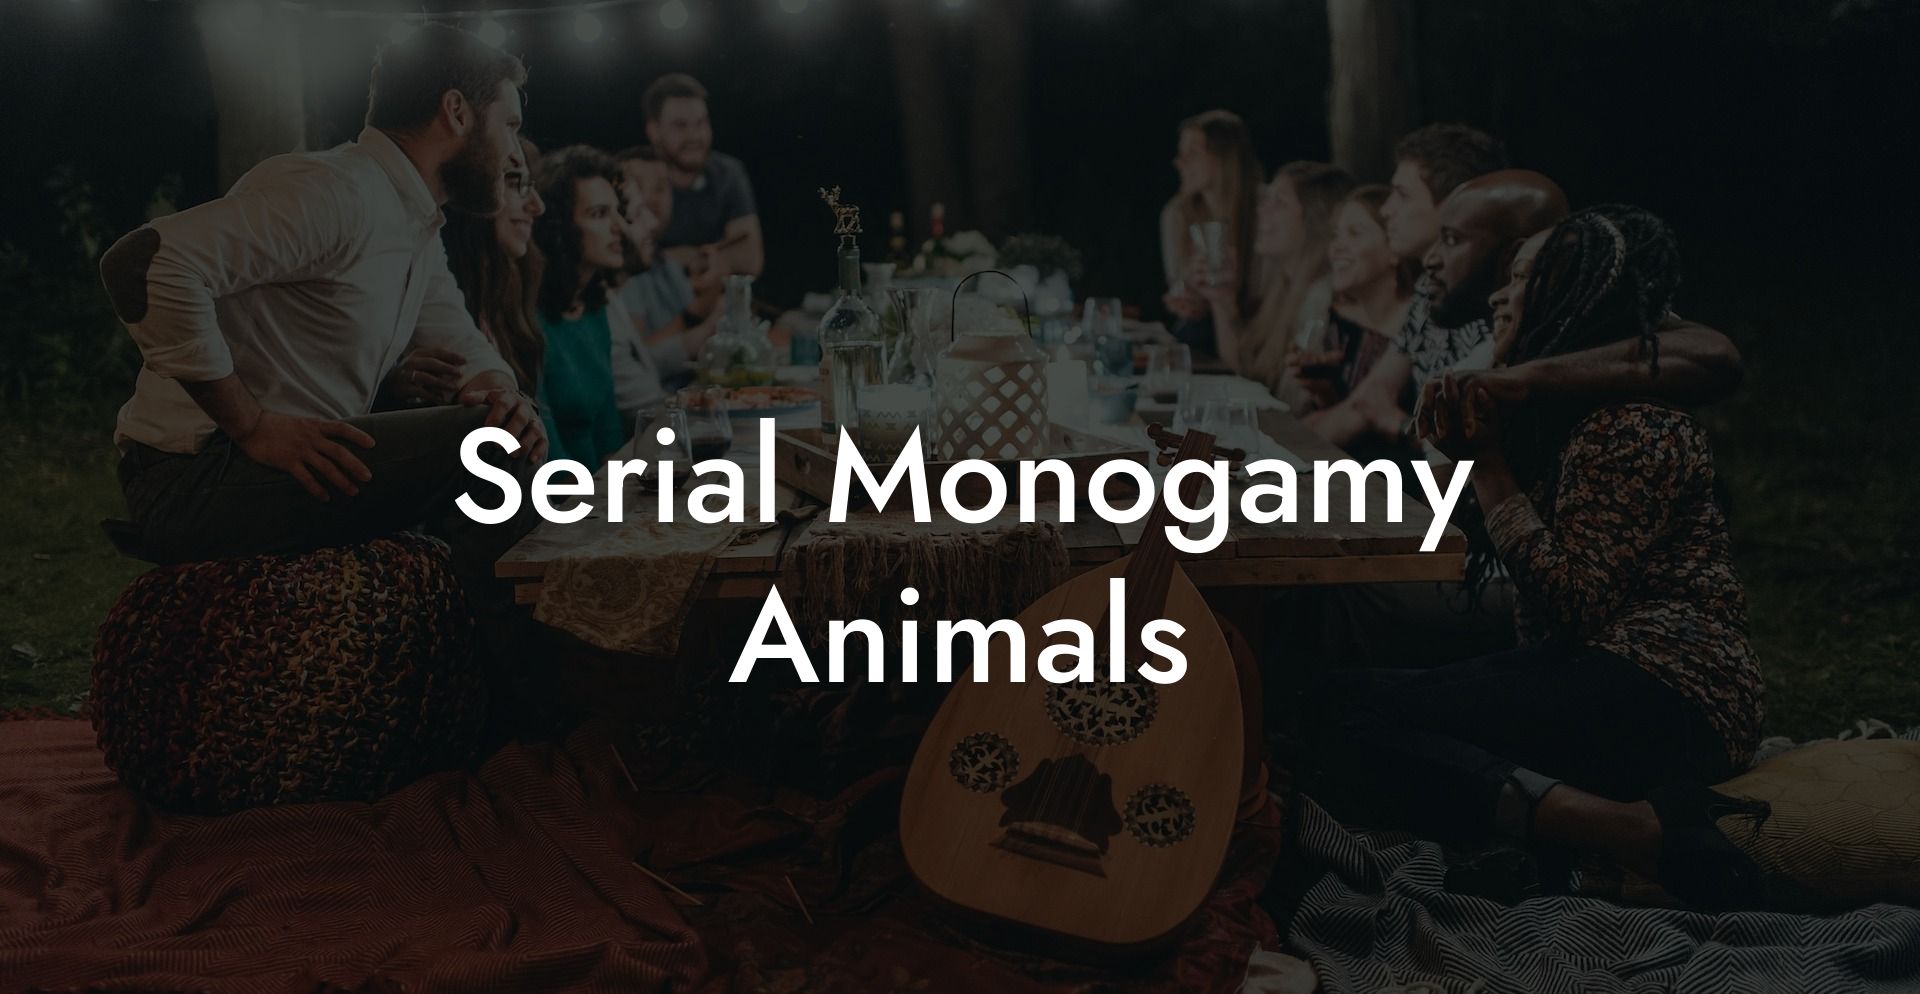 Serial Monogamy Animals